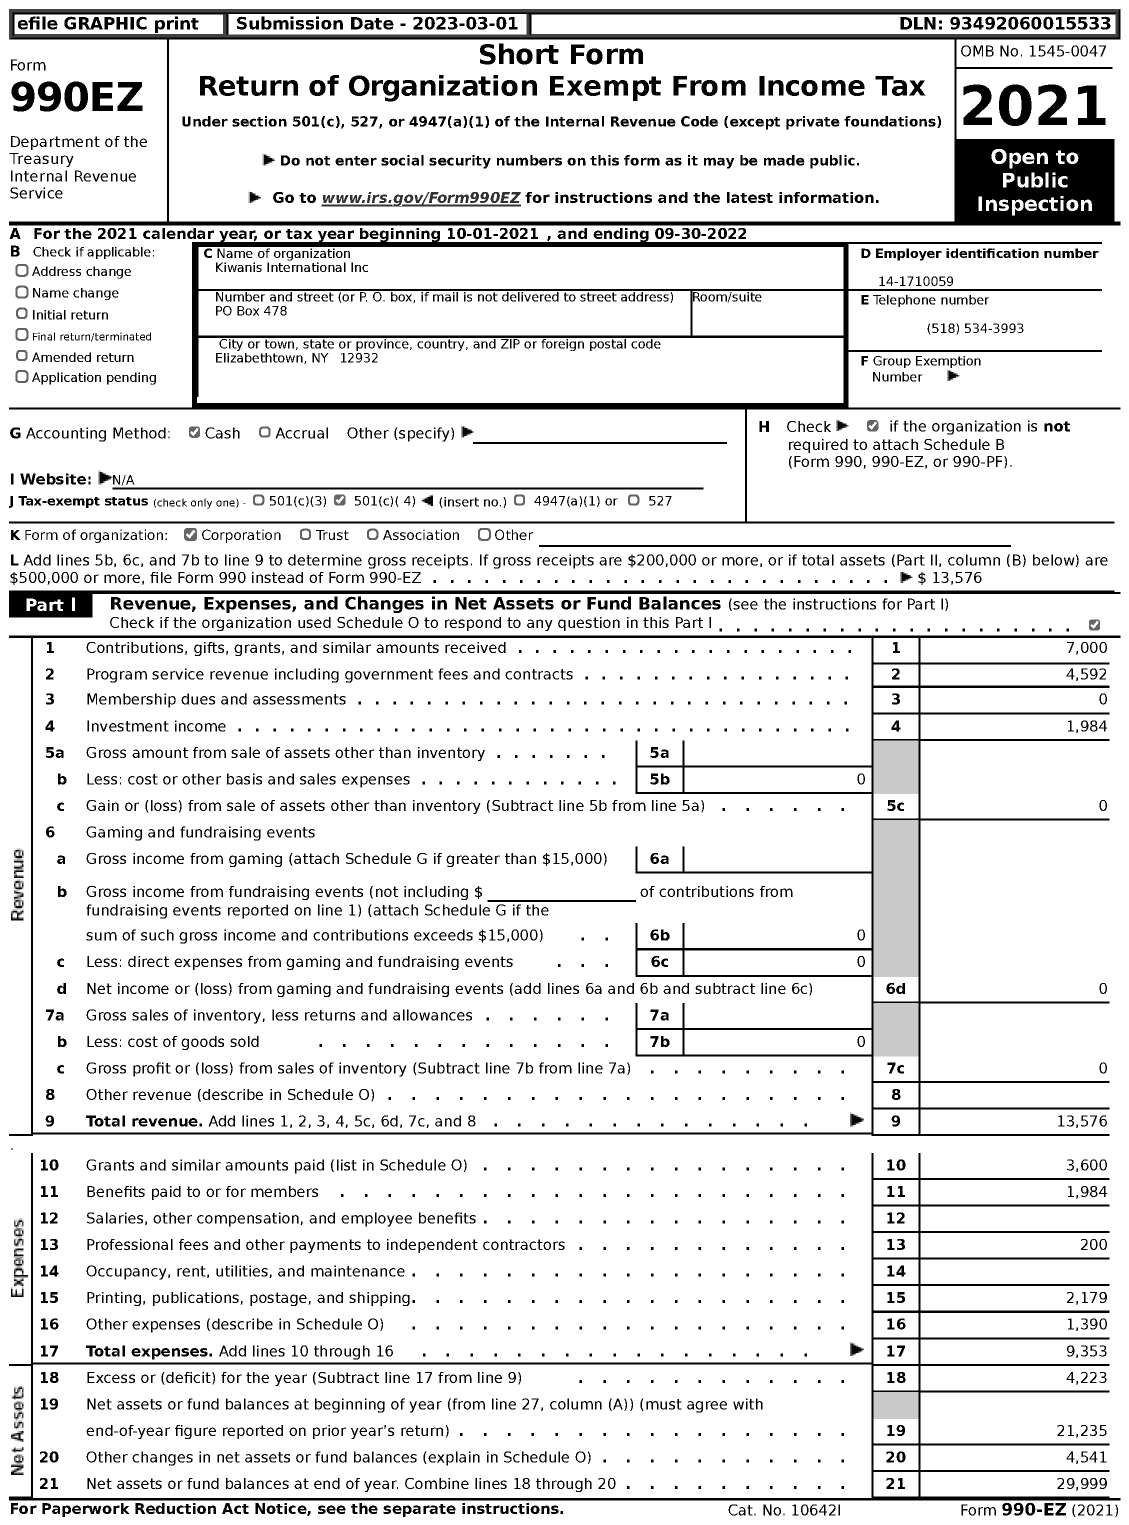 Image of first page of 2021 Form 990EZ for Kiwanis International - K02233 Elizabethtown